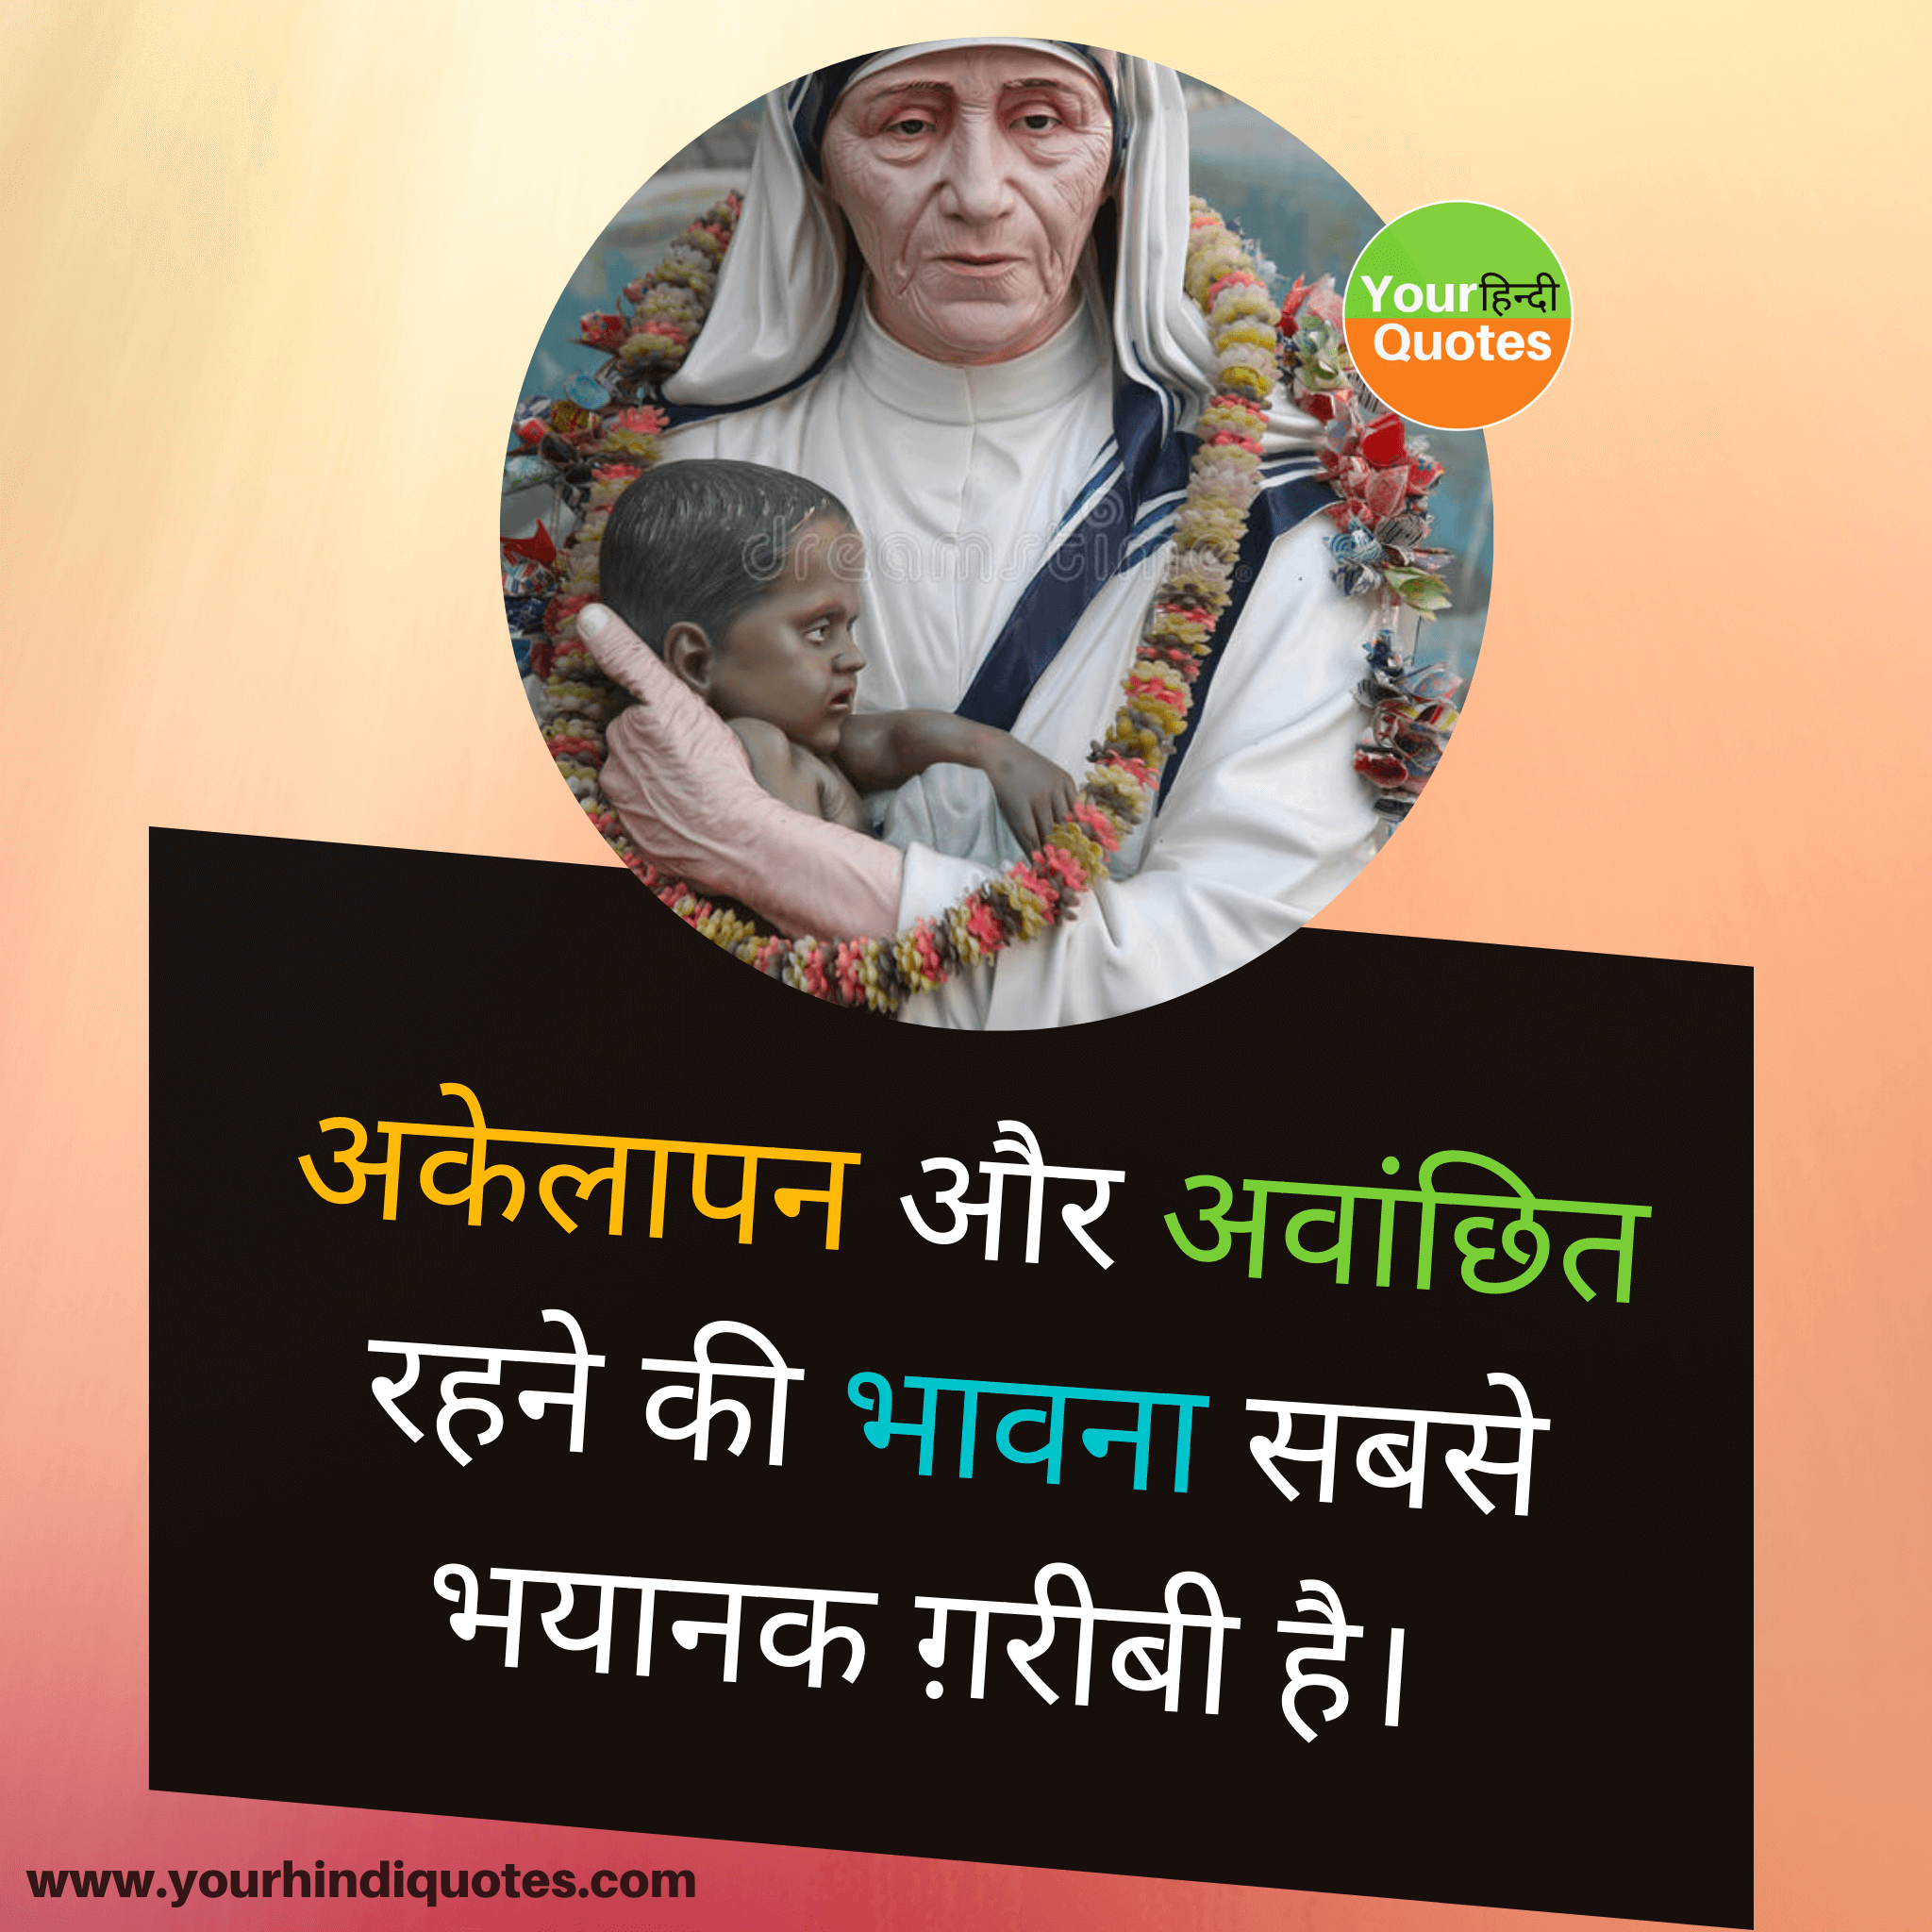 Mother Teresa Quotes in Hindi 